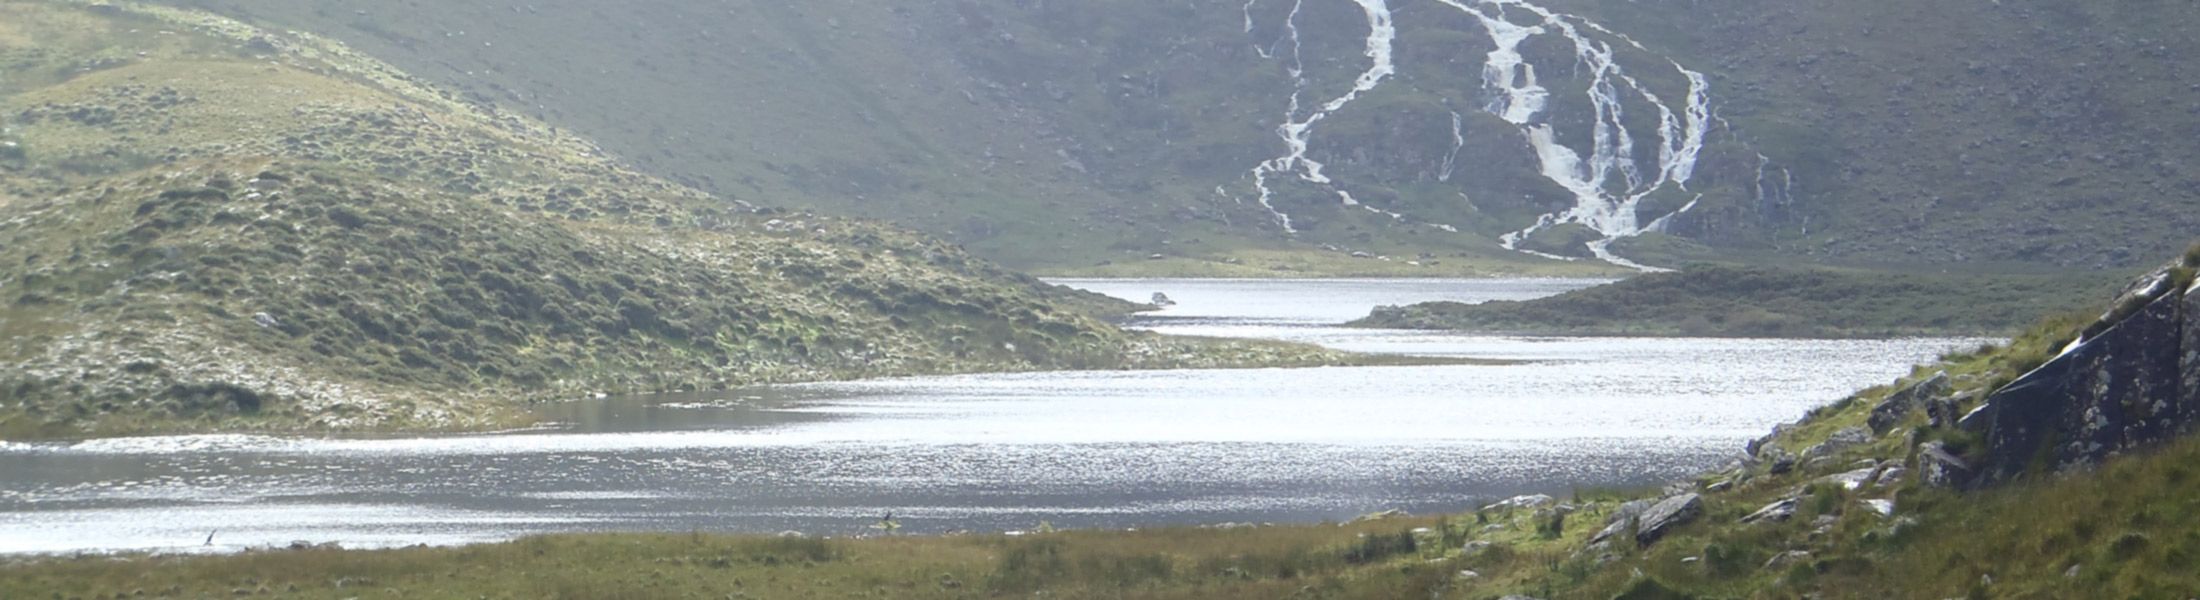 loch a dúin valley waterfalls and lake dingle peninsula ireland